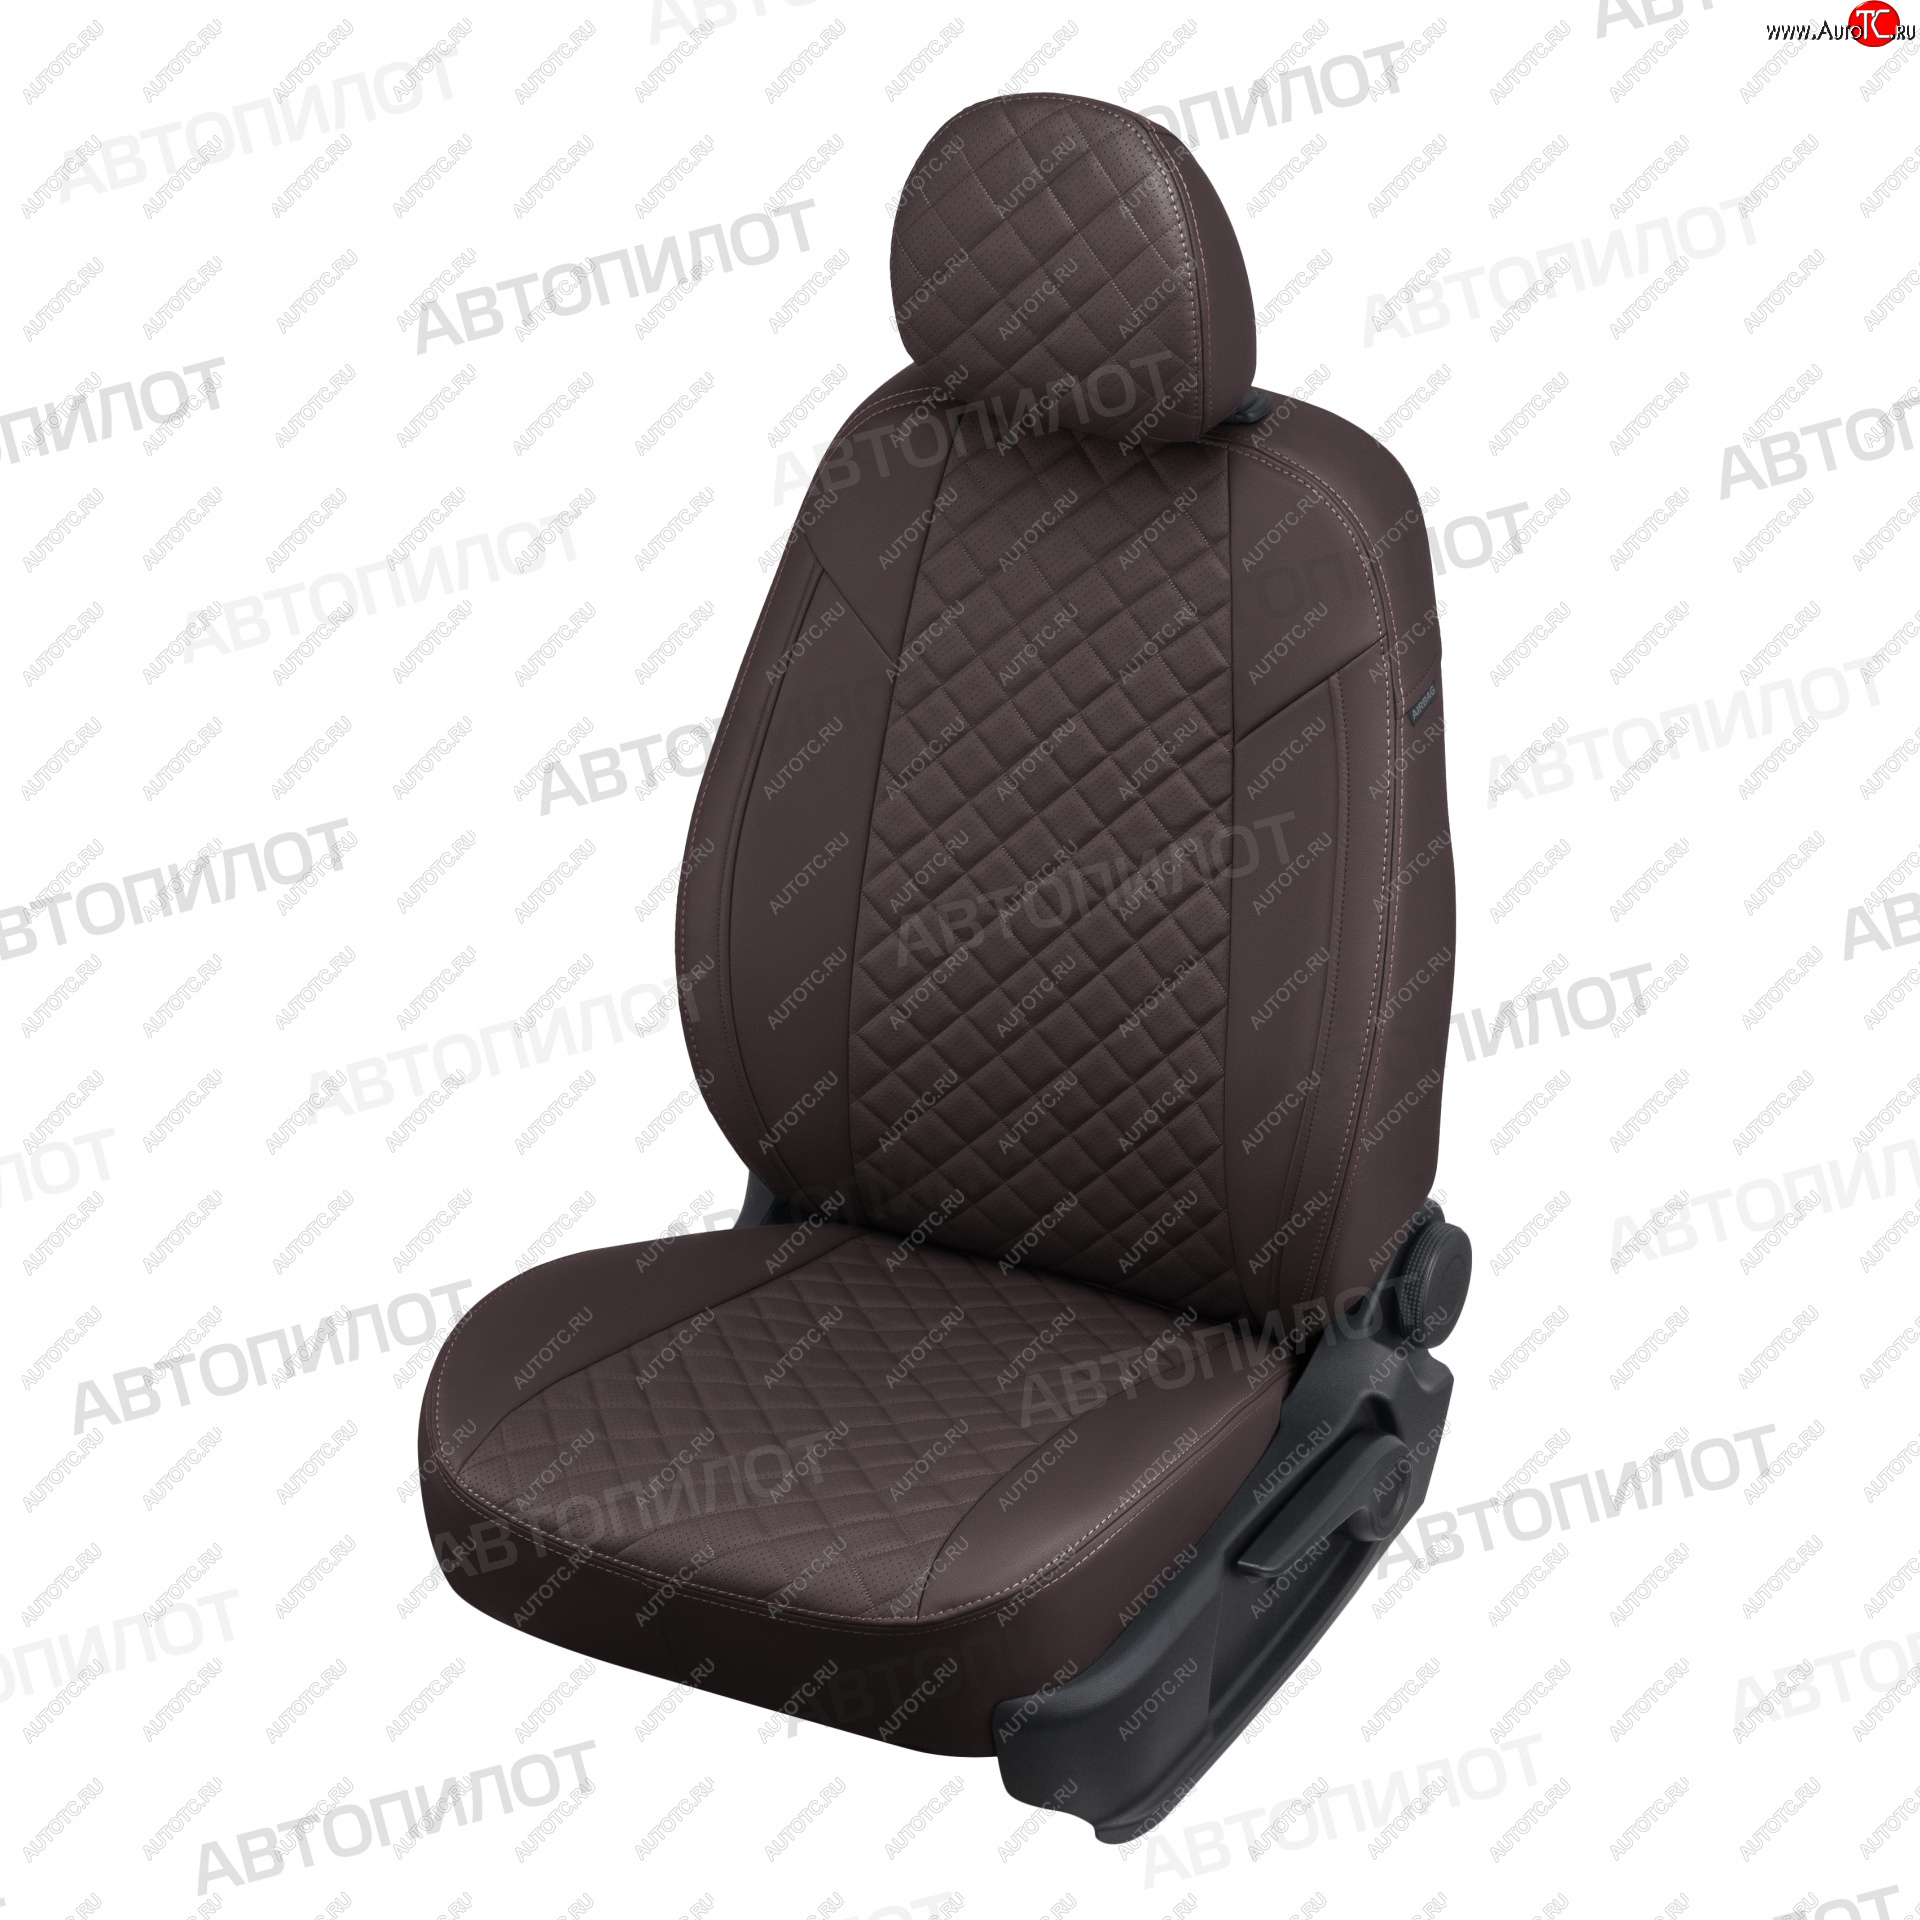 13 999 р. Чехлы сидений (экокожа) Автопилот Ромб  Hyundai Sonata  YF (2009-2014) (шоколад)